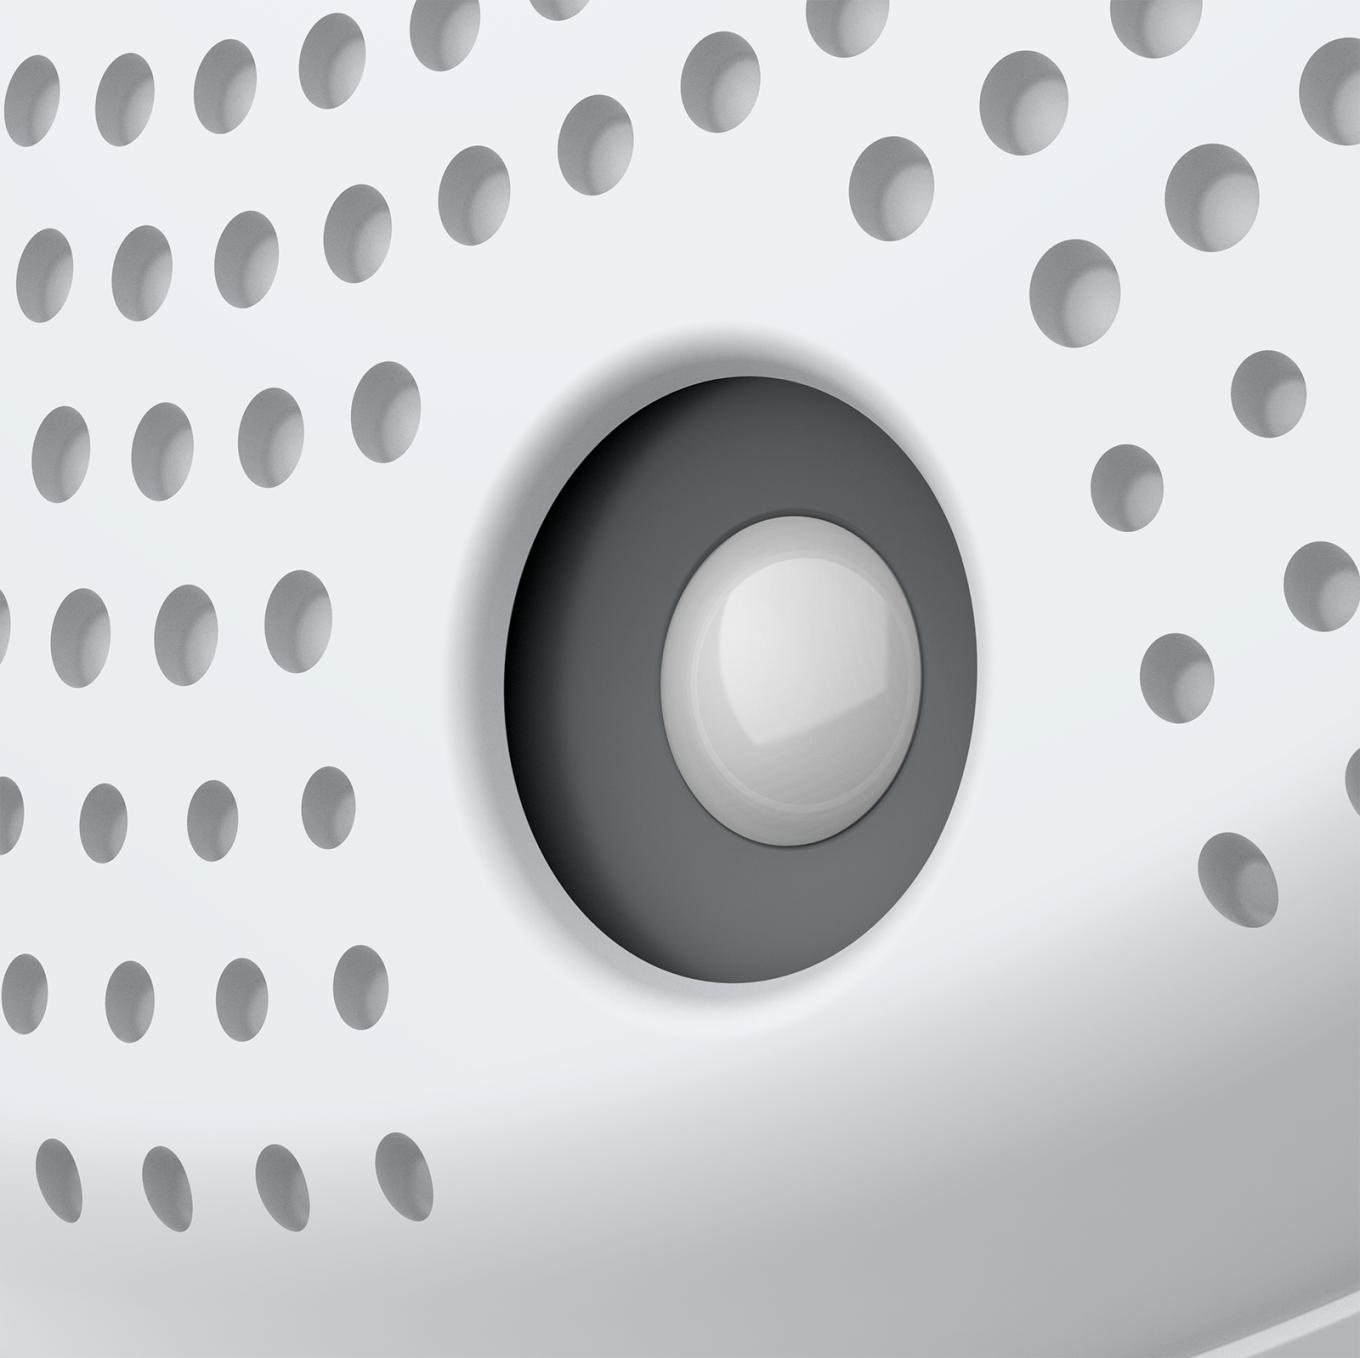 AXIS C1410 Network Mini Speaker sensor PIR desde el ángulo izquierdo